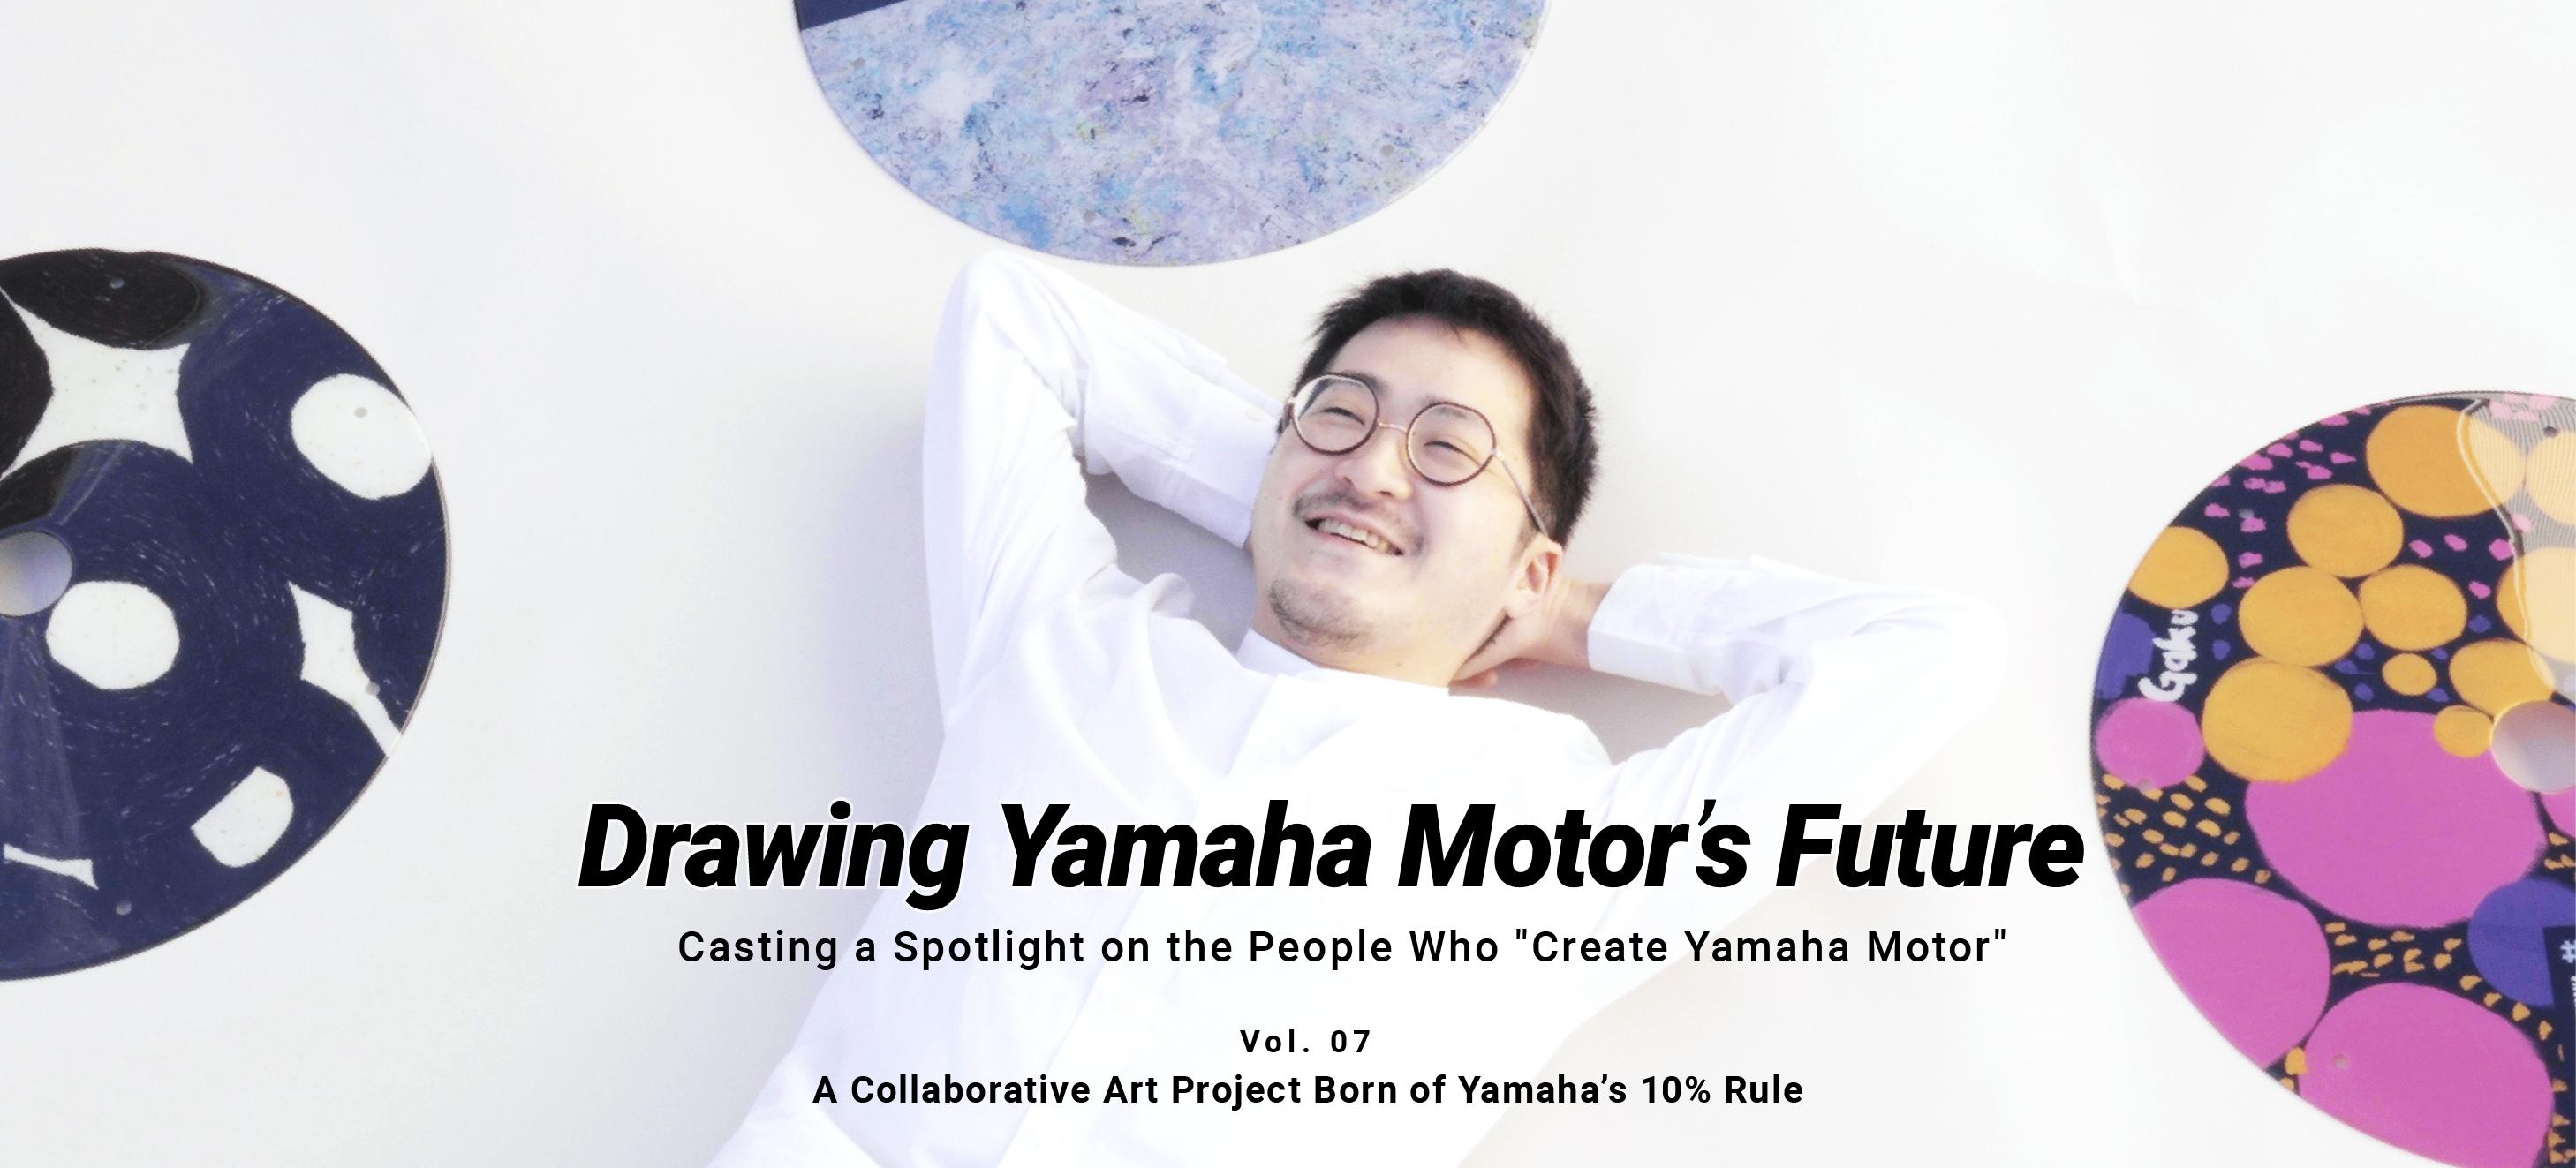 Drawing Yamaha’s Future Vol. 07 Ryosuke Imamura A Collaborative Art Project Born of Yamaha’s 10% Rule